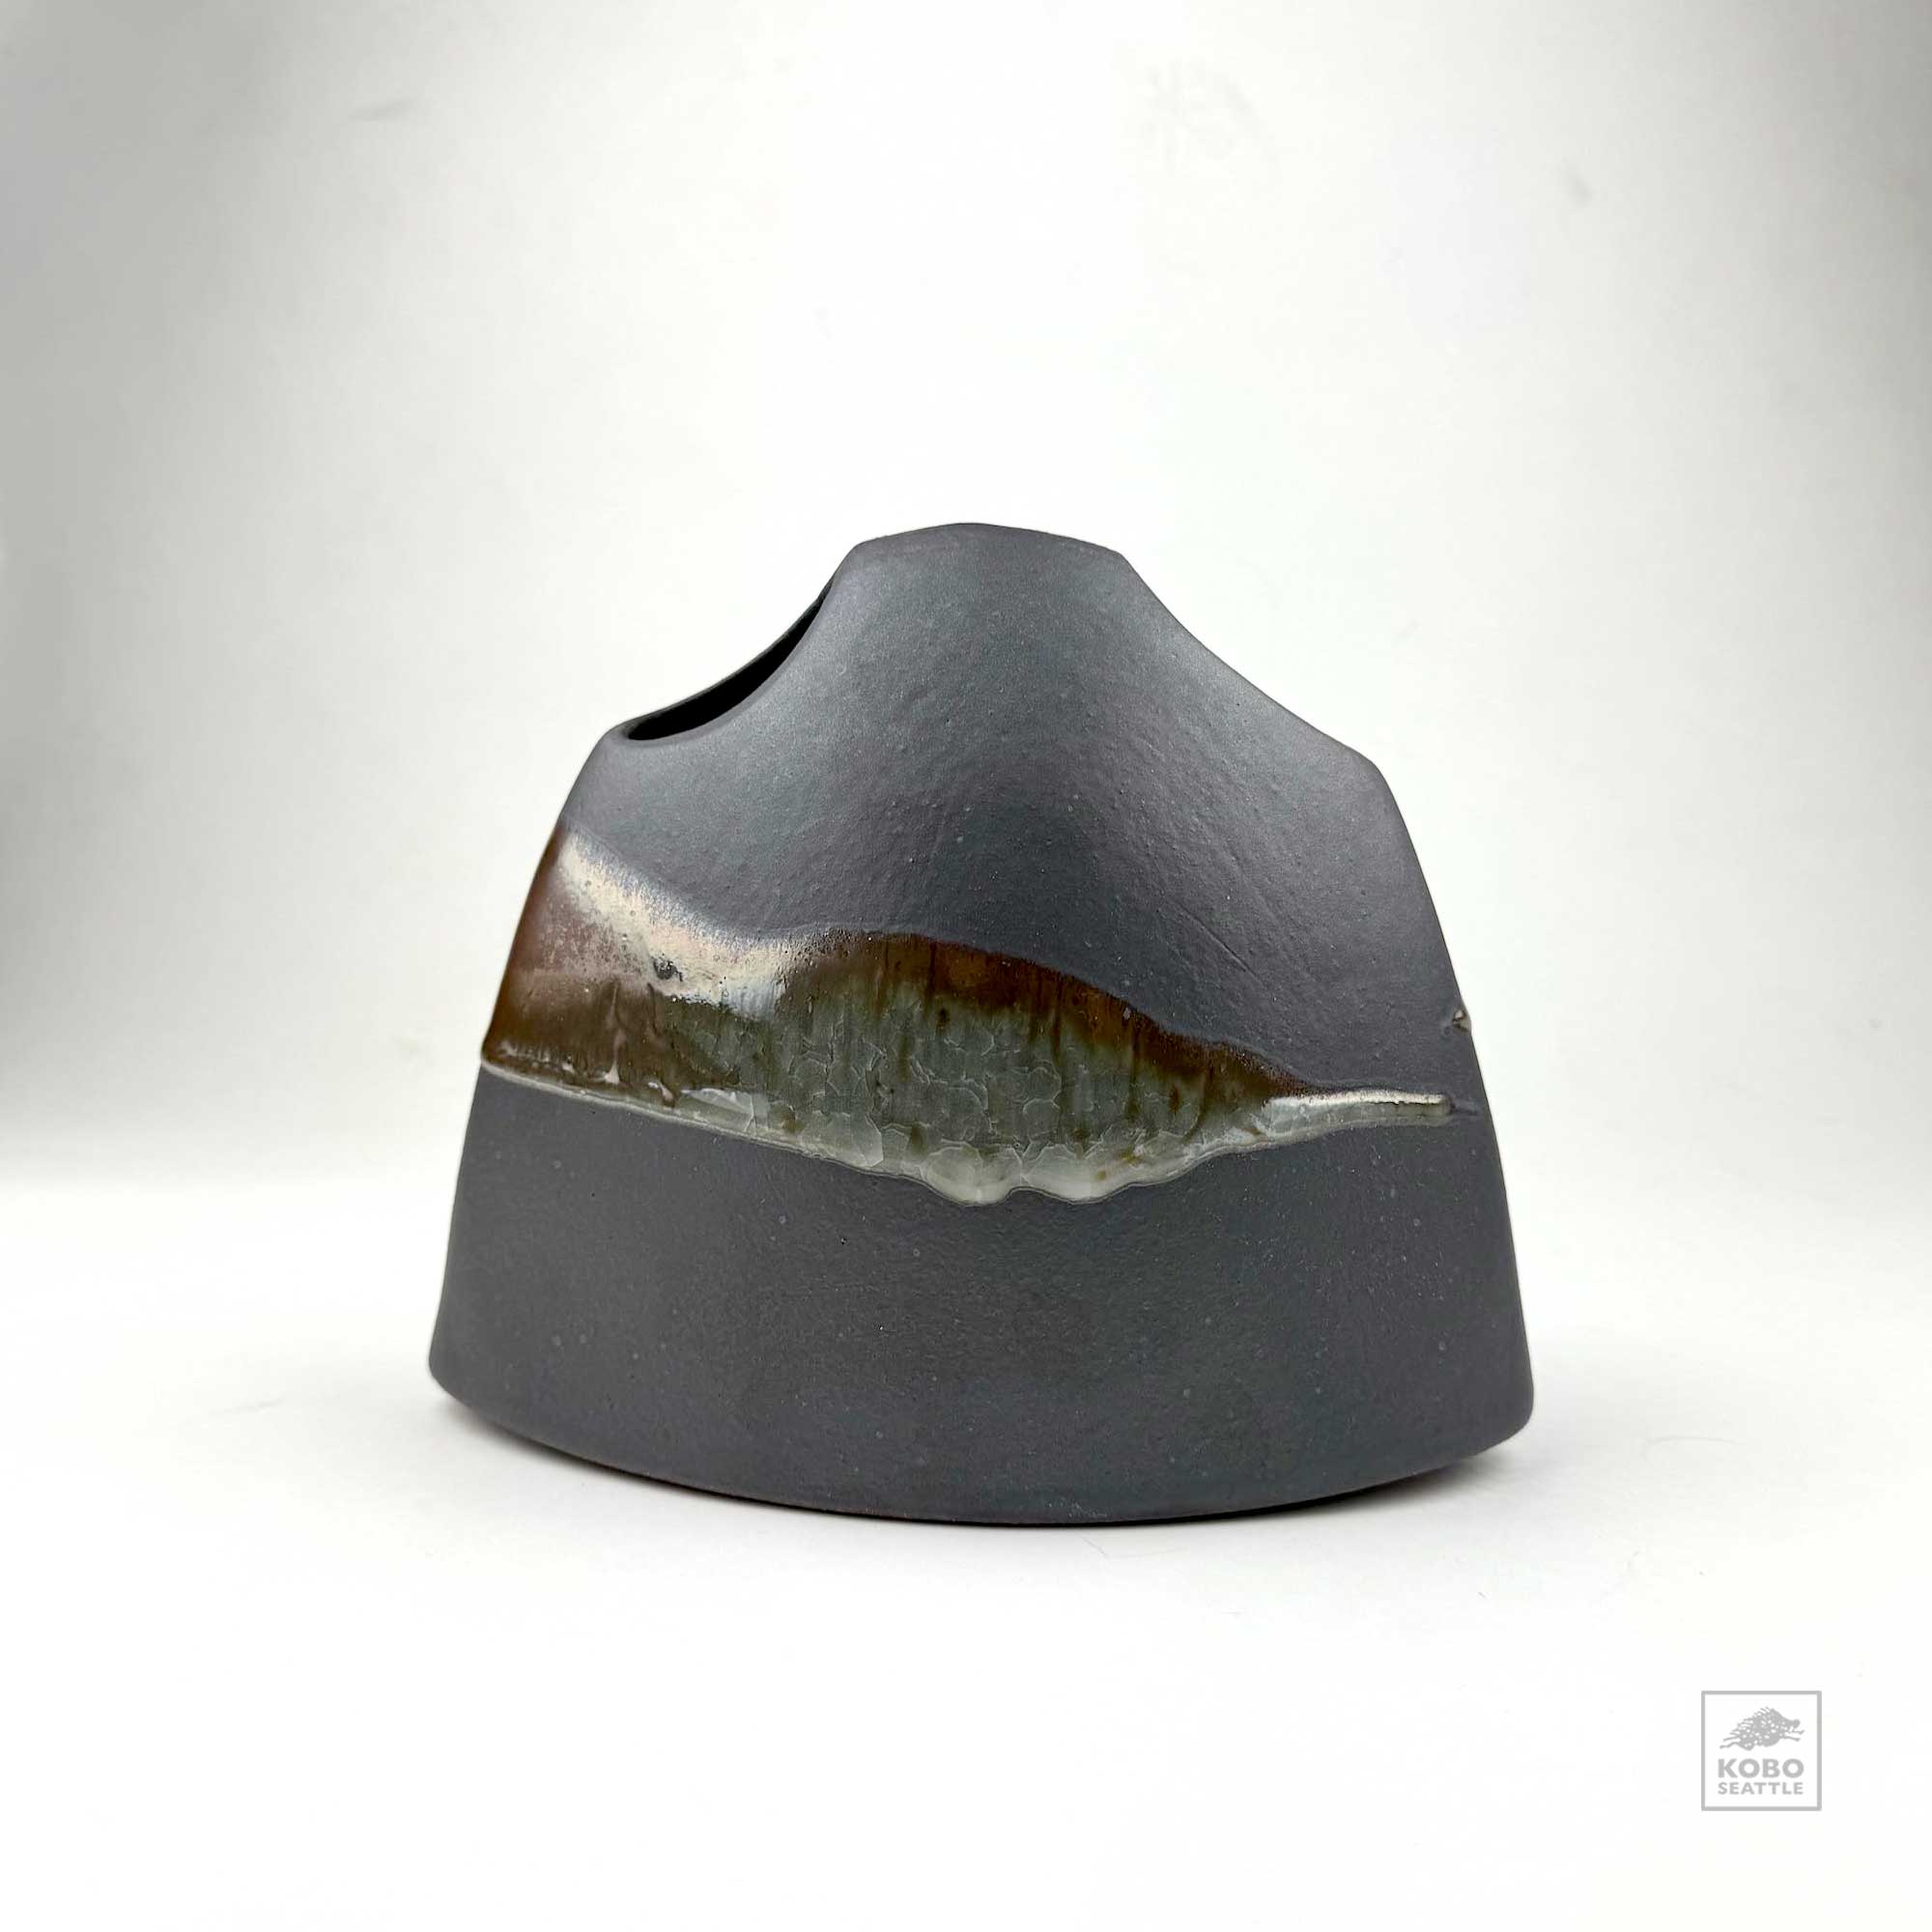 Altered Dome Vase by Reid Ozaki